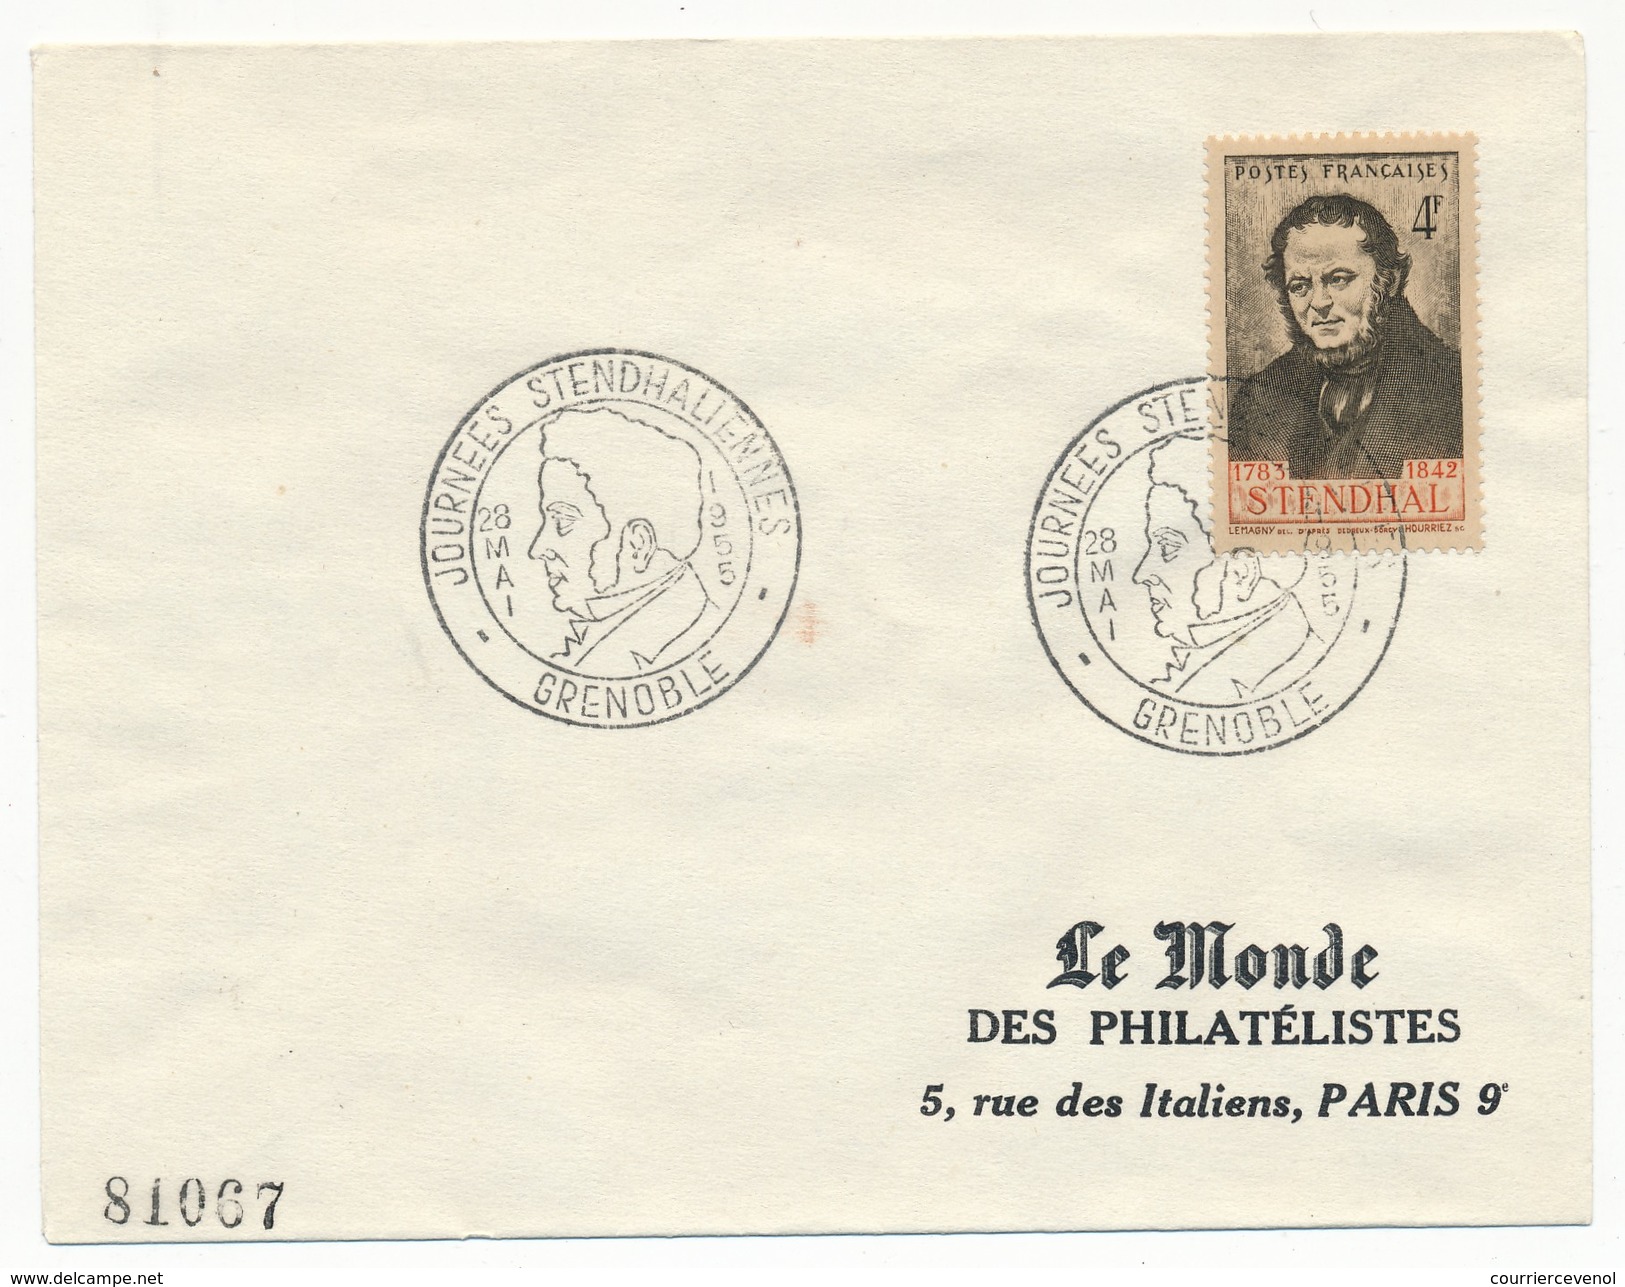 FRANCE - Enveloppe - Cachet Temporaire "Journées Stendhaliennes" GRENOBLE 28 Mai 1955 - Writers